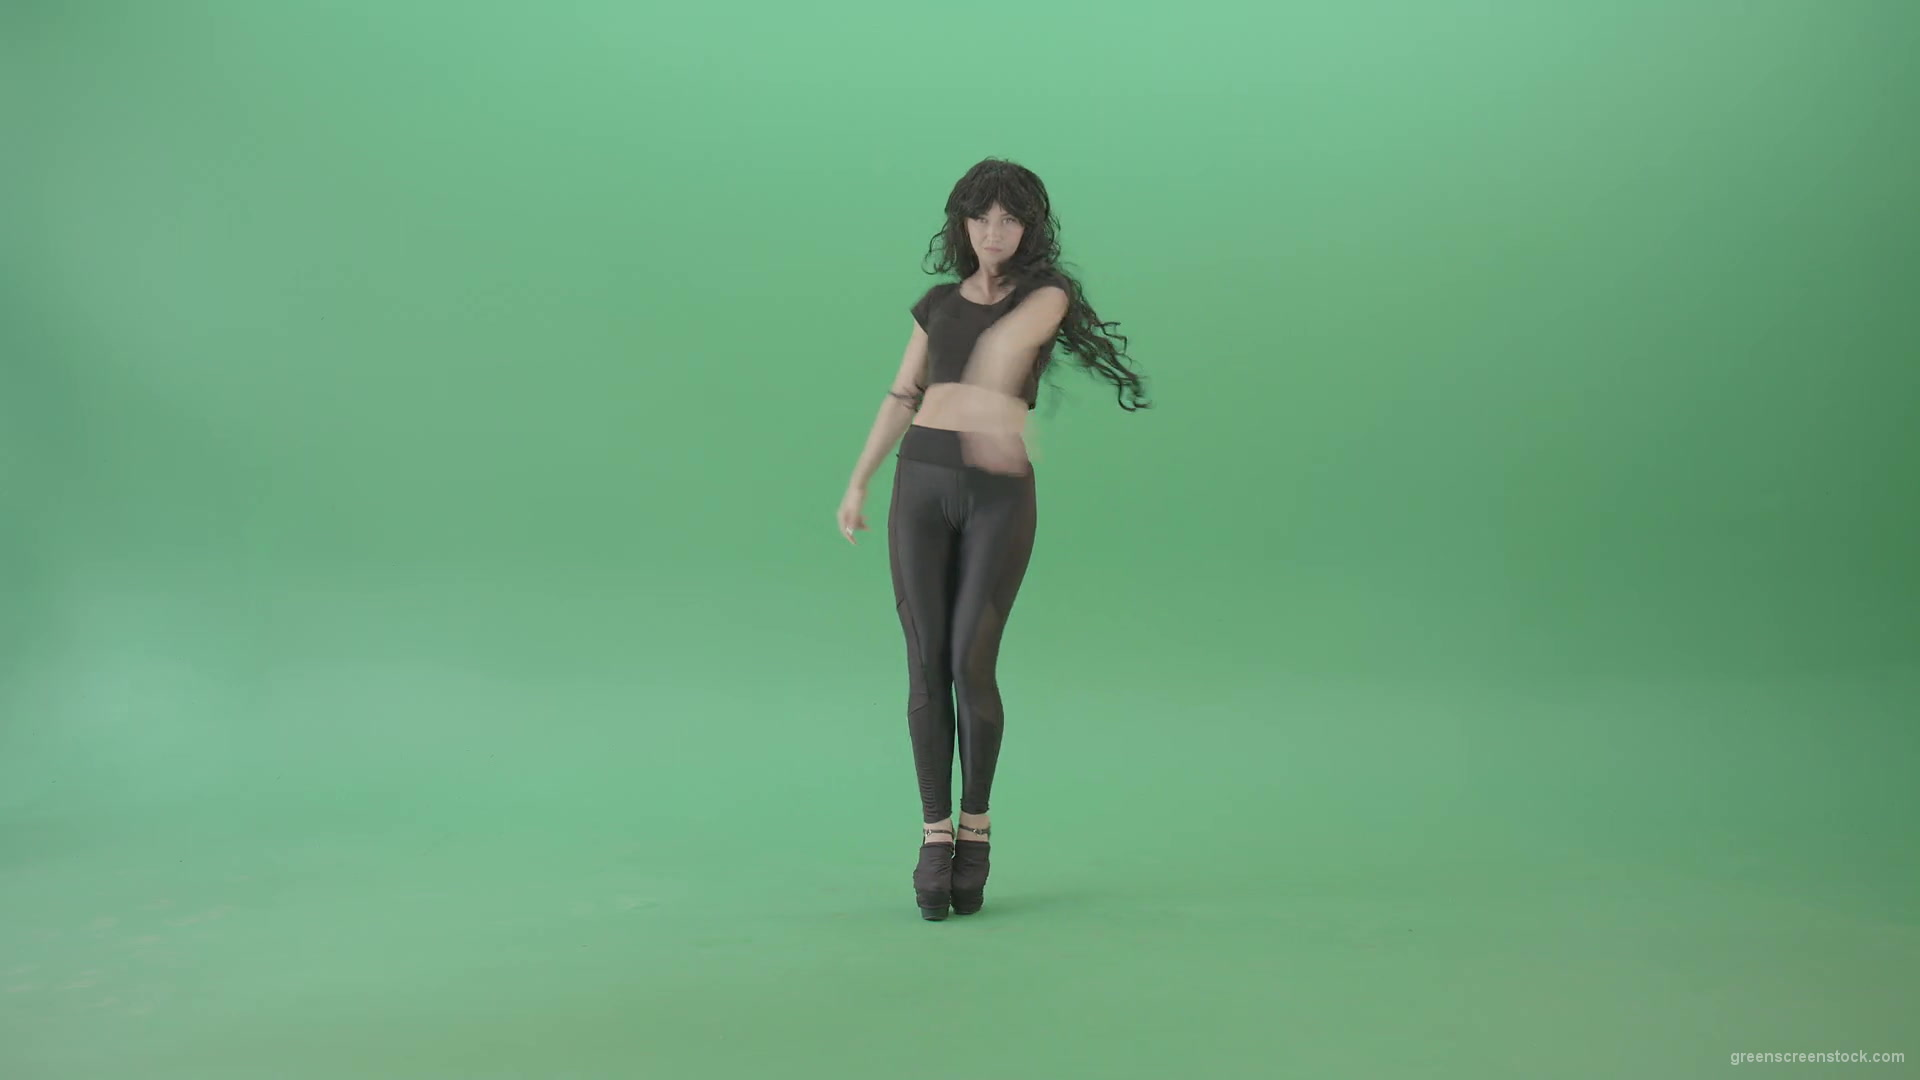 Green-Screen-Woman-in-black-latex-dress-sexy-dancing-4K-Video-Footage-1920_004 Green Screen Stock